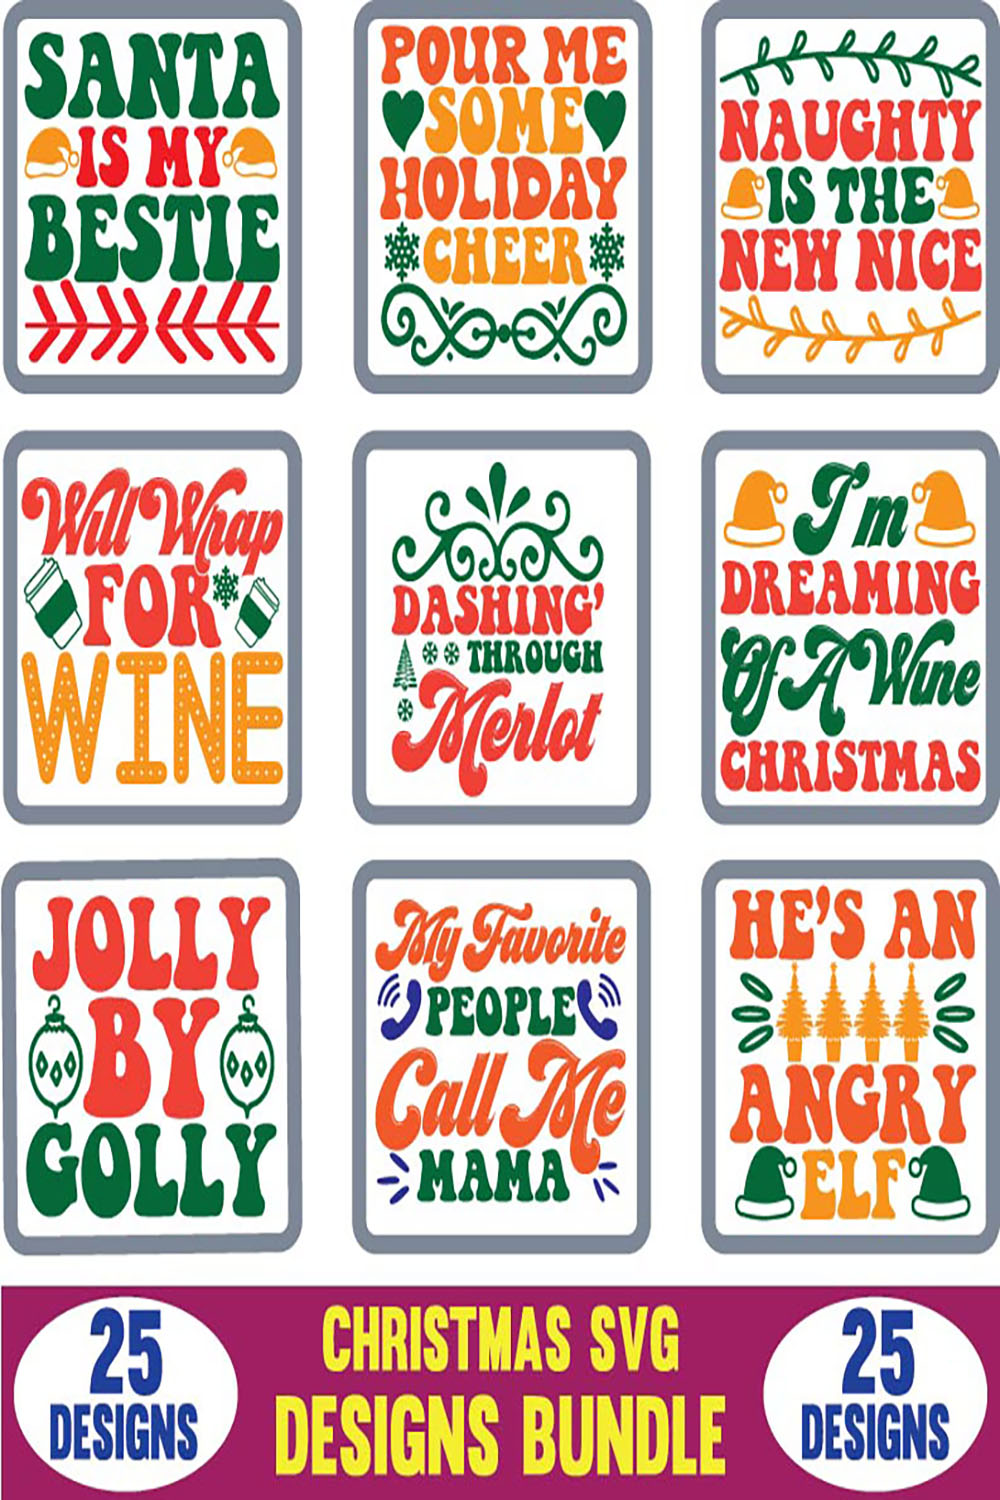 Christmas SVG Designs Bundle pinterest image.